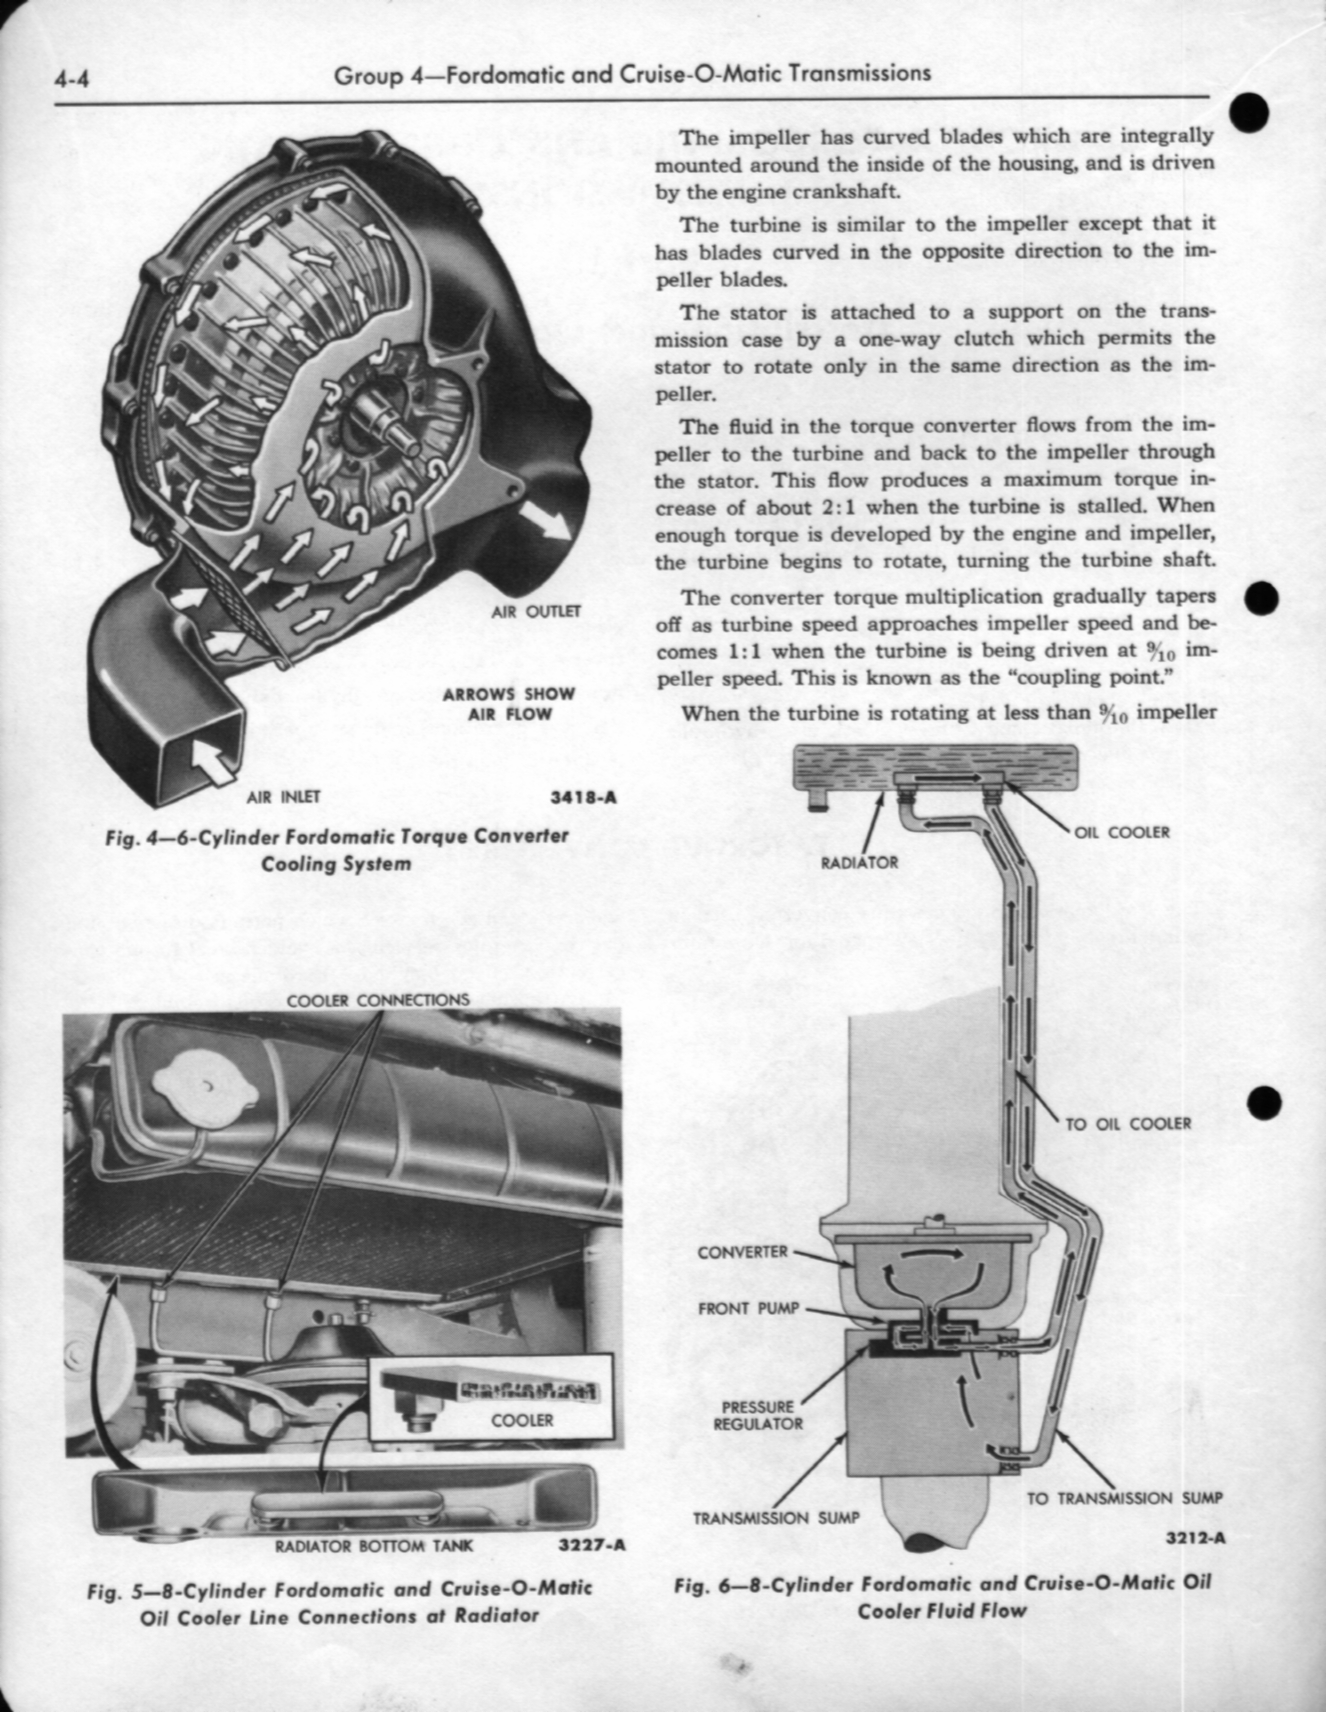 1958 Ford cruise-o-matic transmission #1